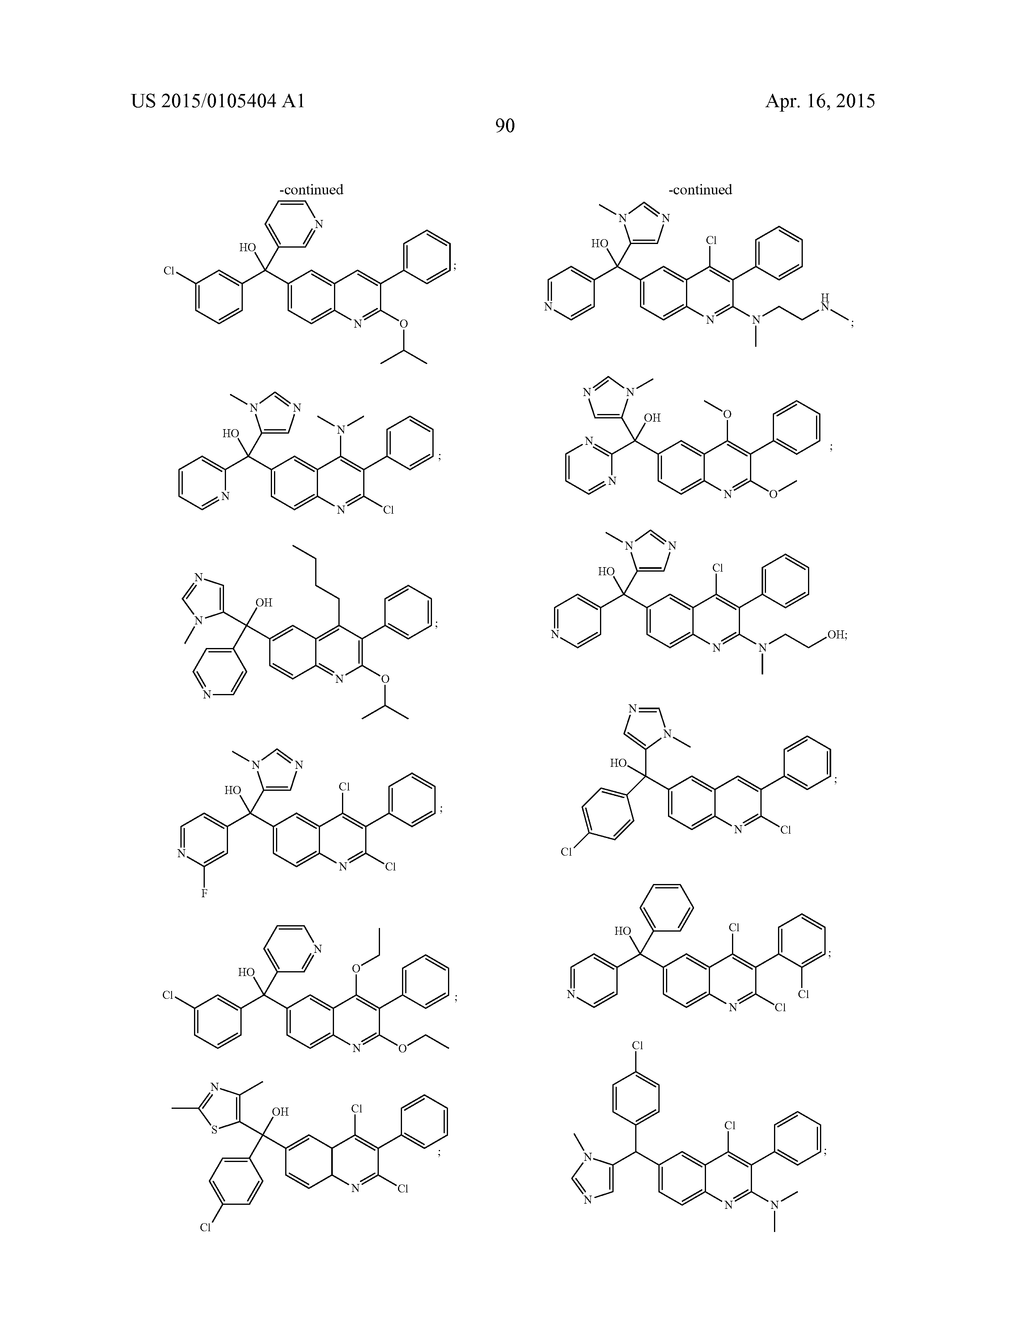 PHENYL LINKED QUINOLINYL MODULATORS OF RORyt - diagram, schematic, and image 91